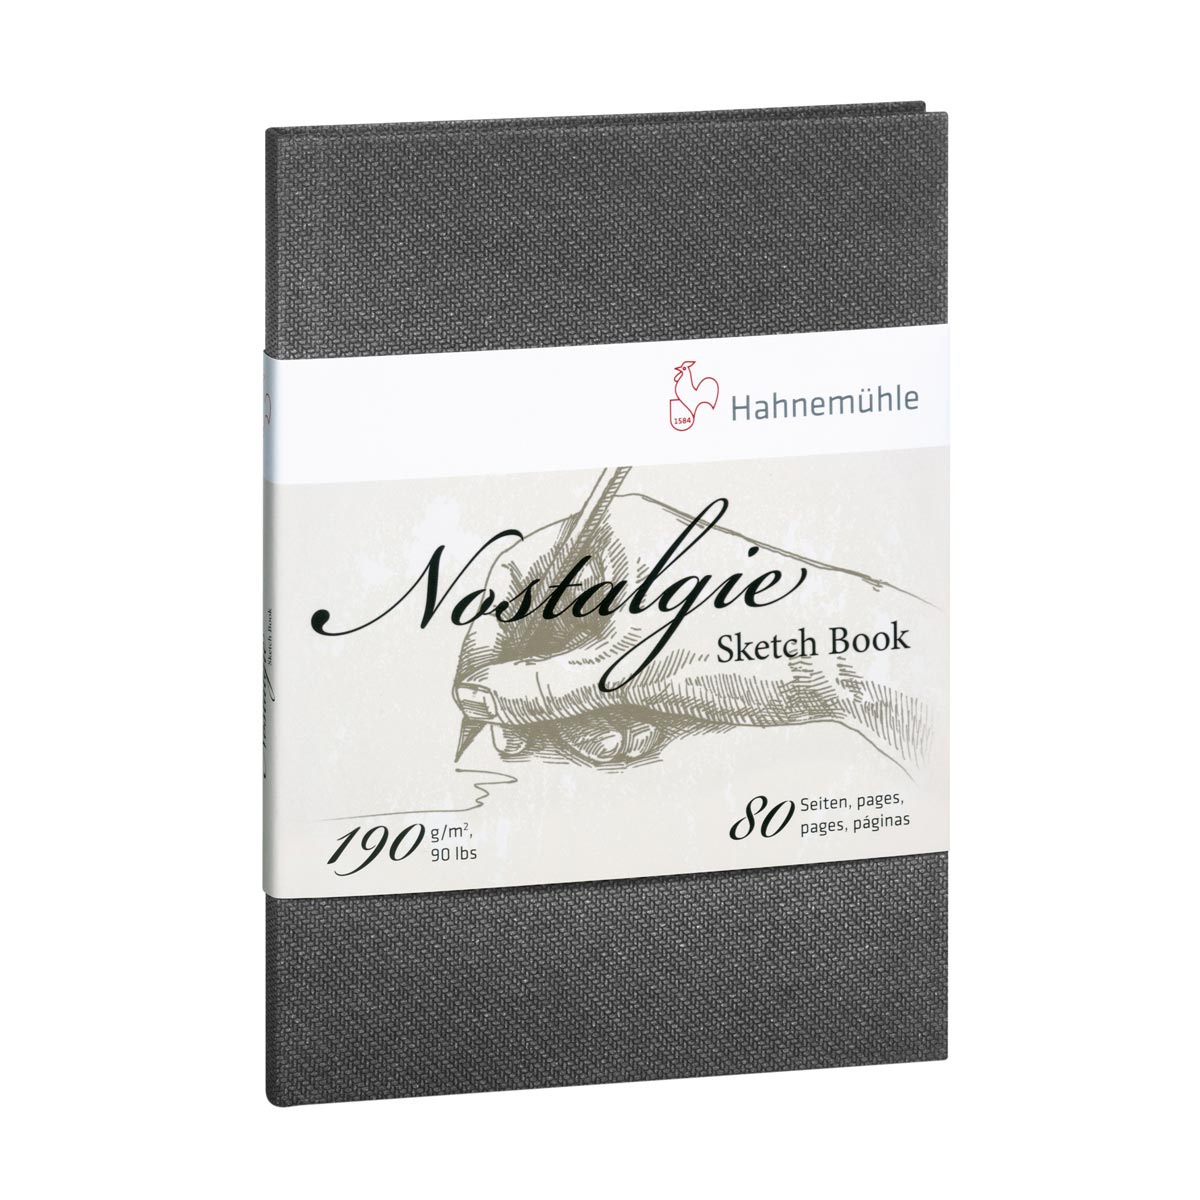 Hahnemuhle - Nostalgie Sketch Book - A5 190GSM - Porträt